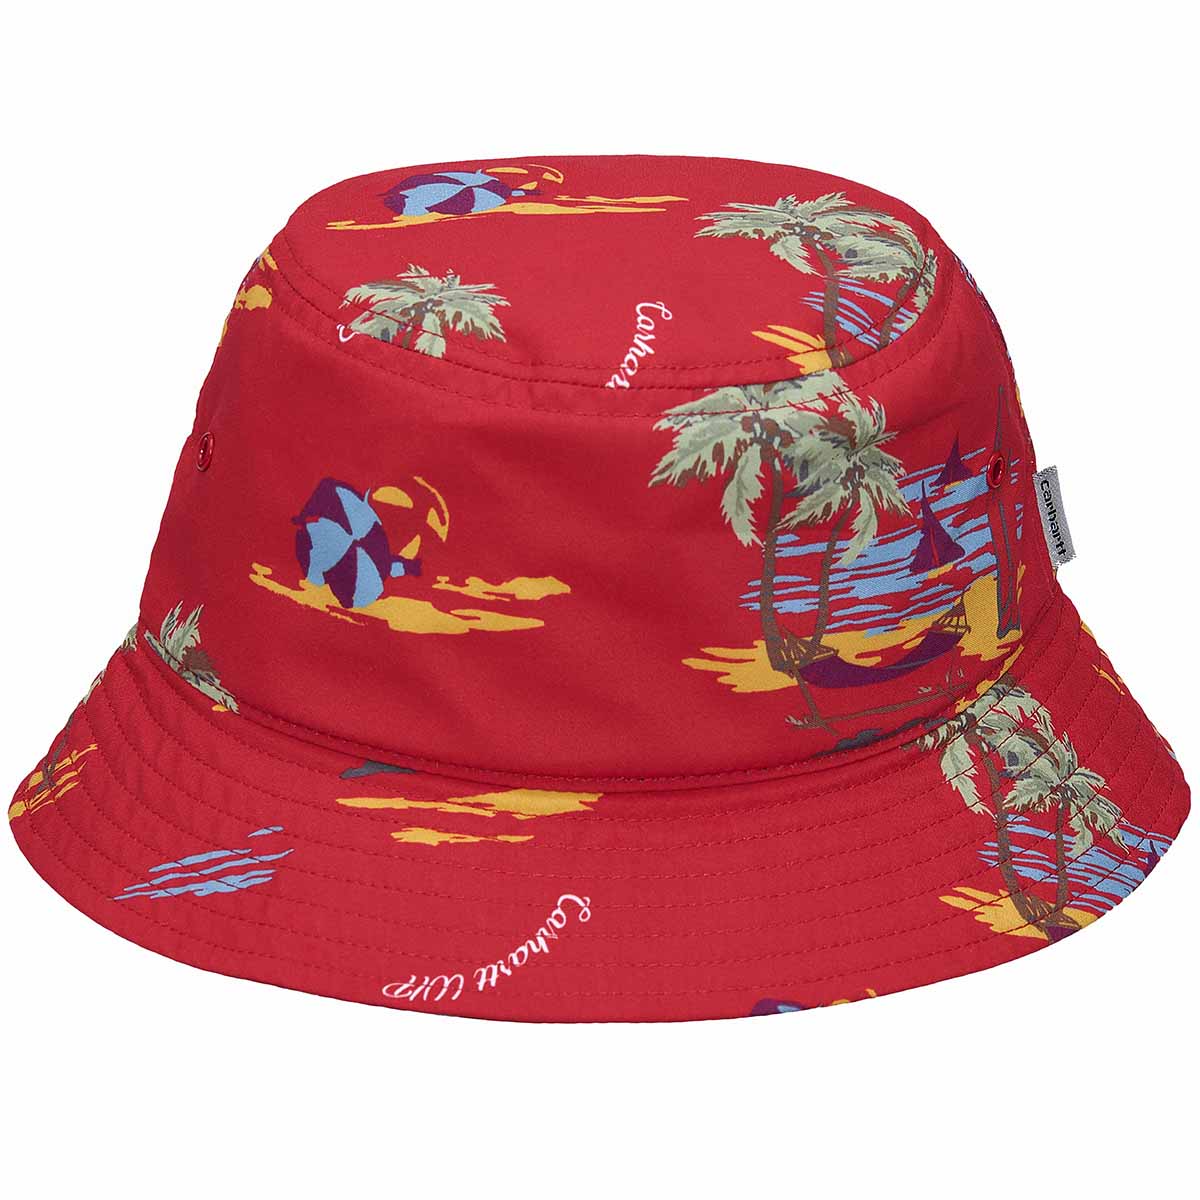 Carhartt WIP Orlean Bucket Hat